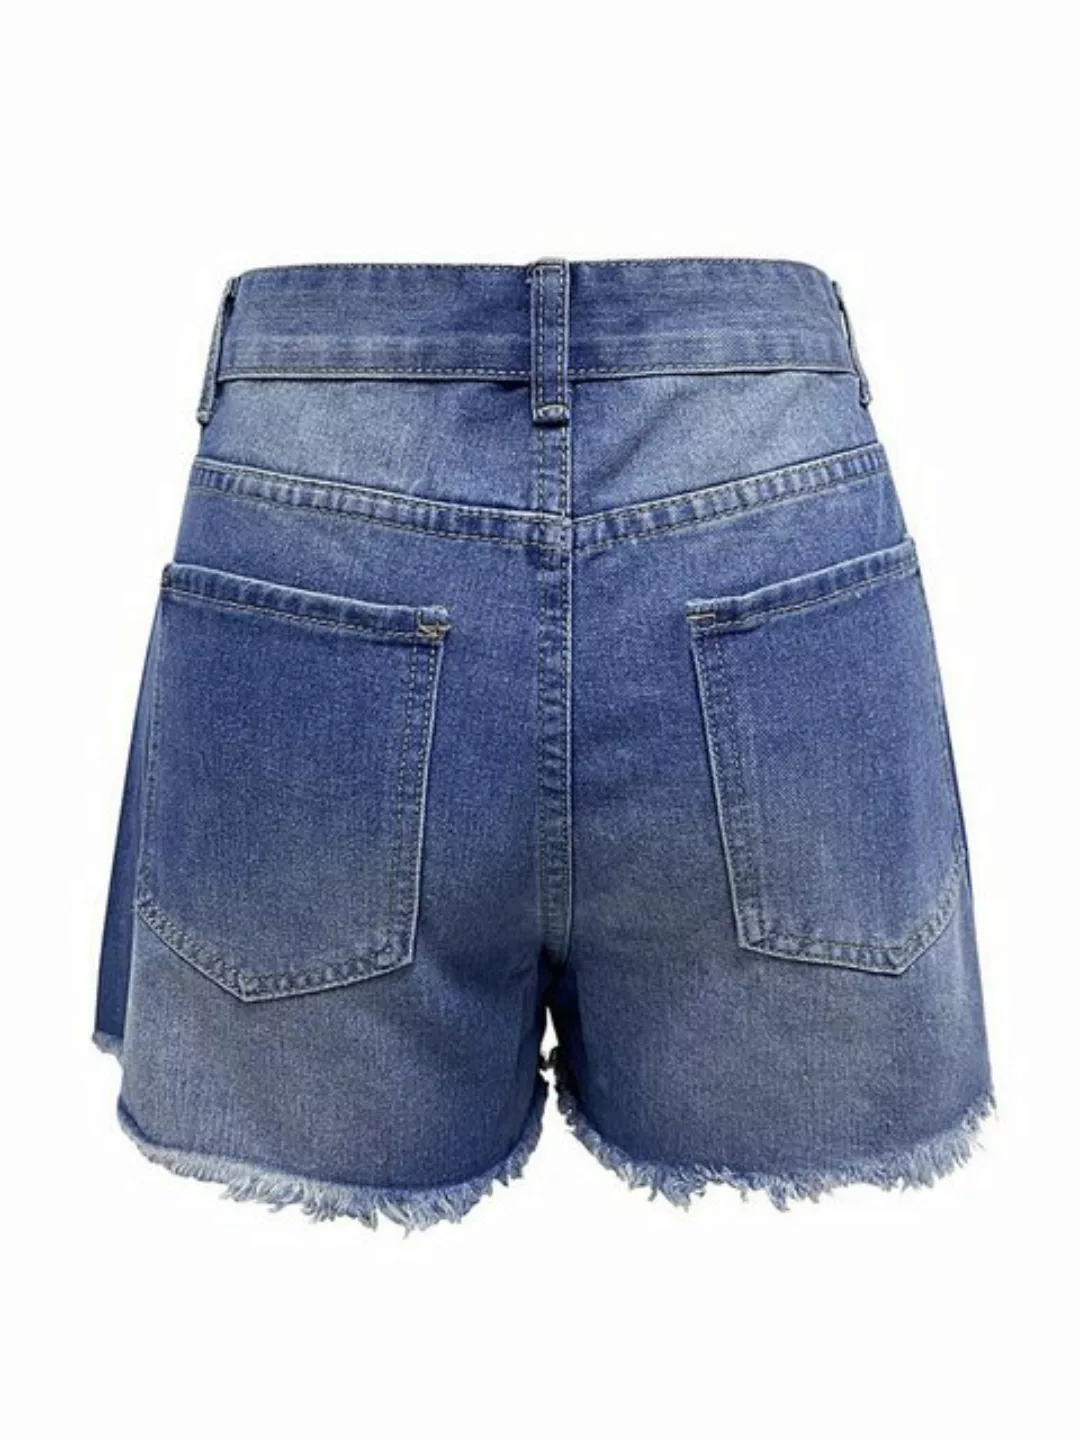 FIDDY Jeansshorts Zerrissene Jeans Shorts -Relaxshorts-Hotpants günstig online kaufen